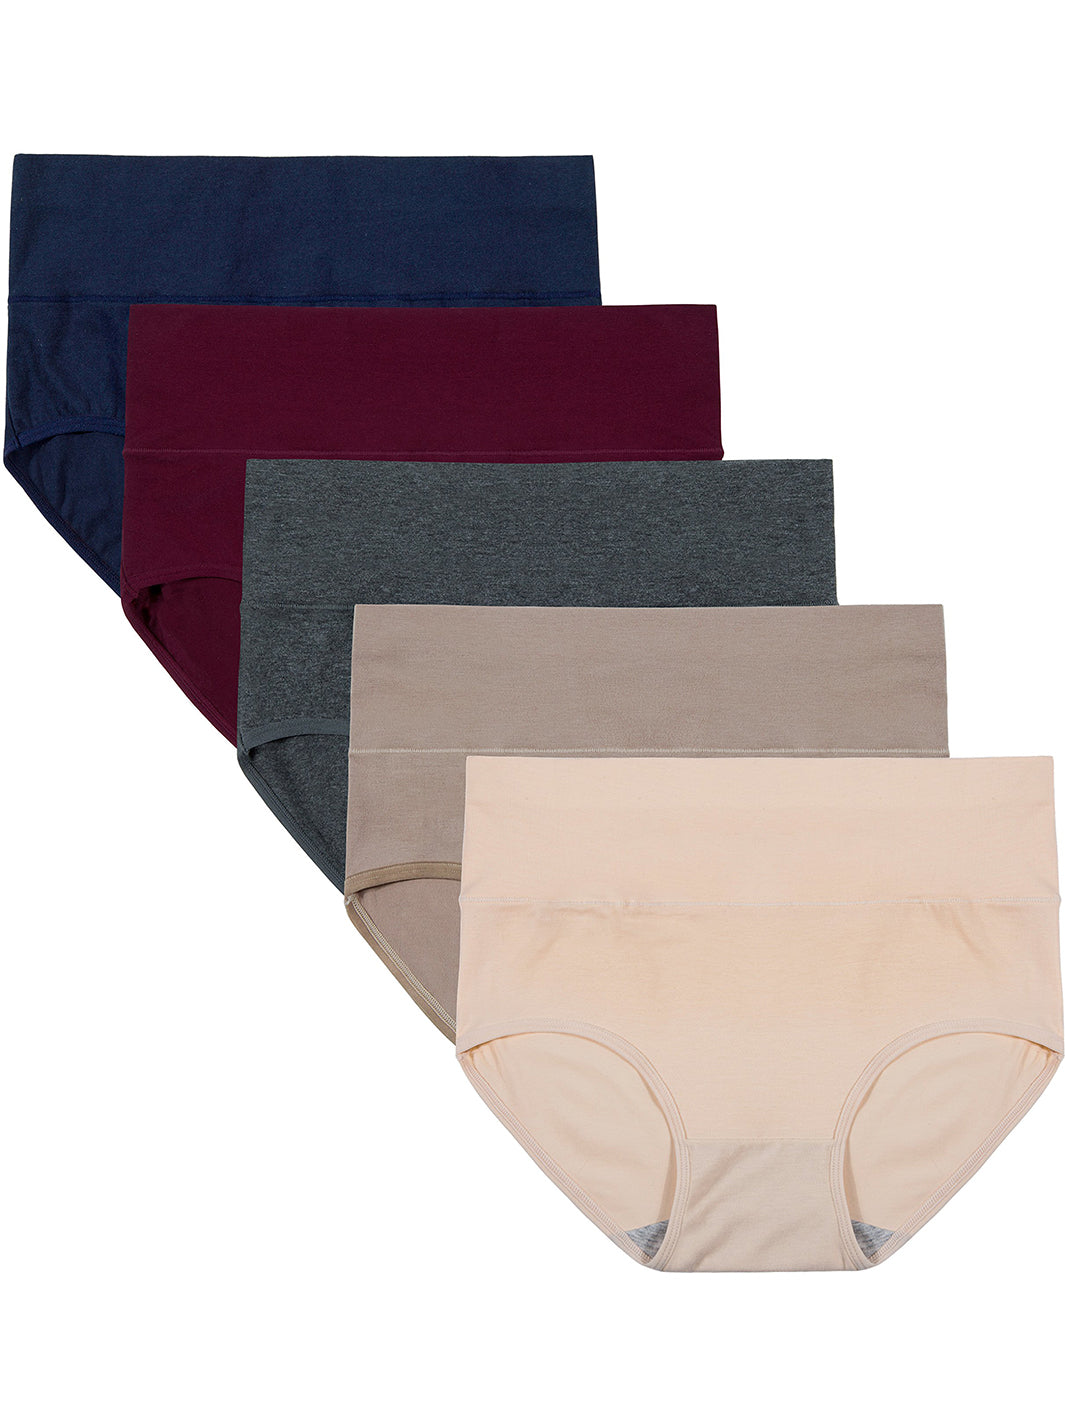 ANNYISON Women Underwear High Waist Full Cover Cotton Briefs Colorful  Panties for Women